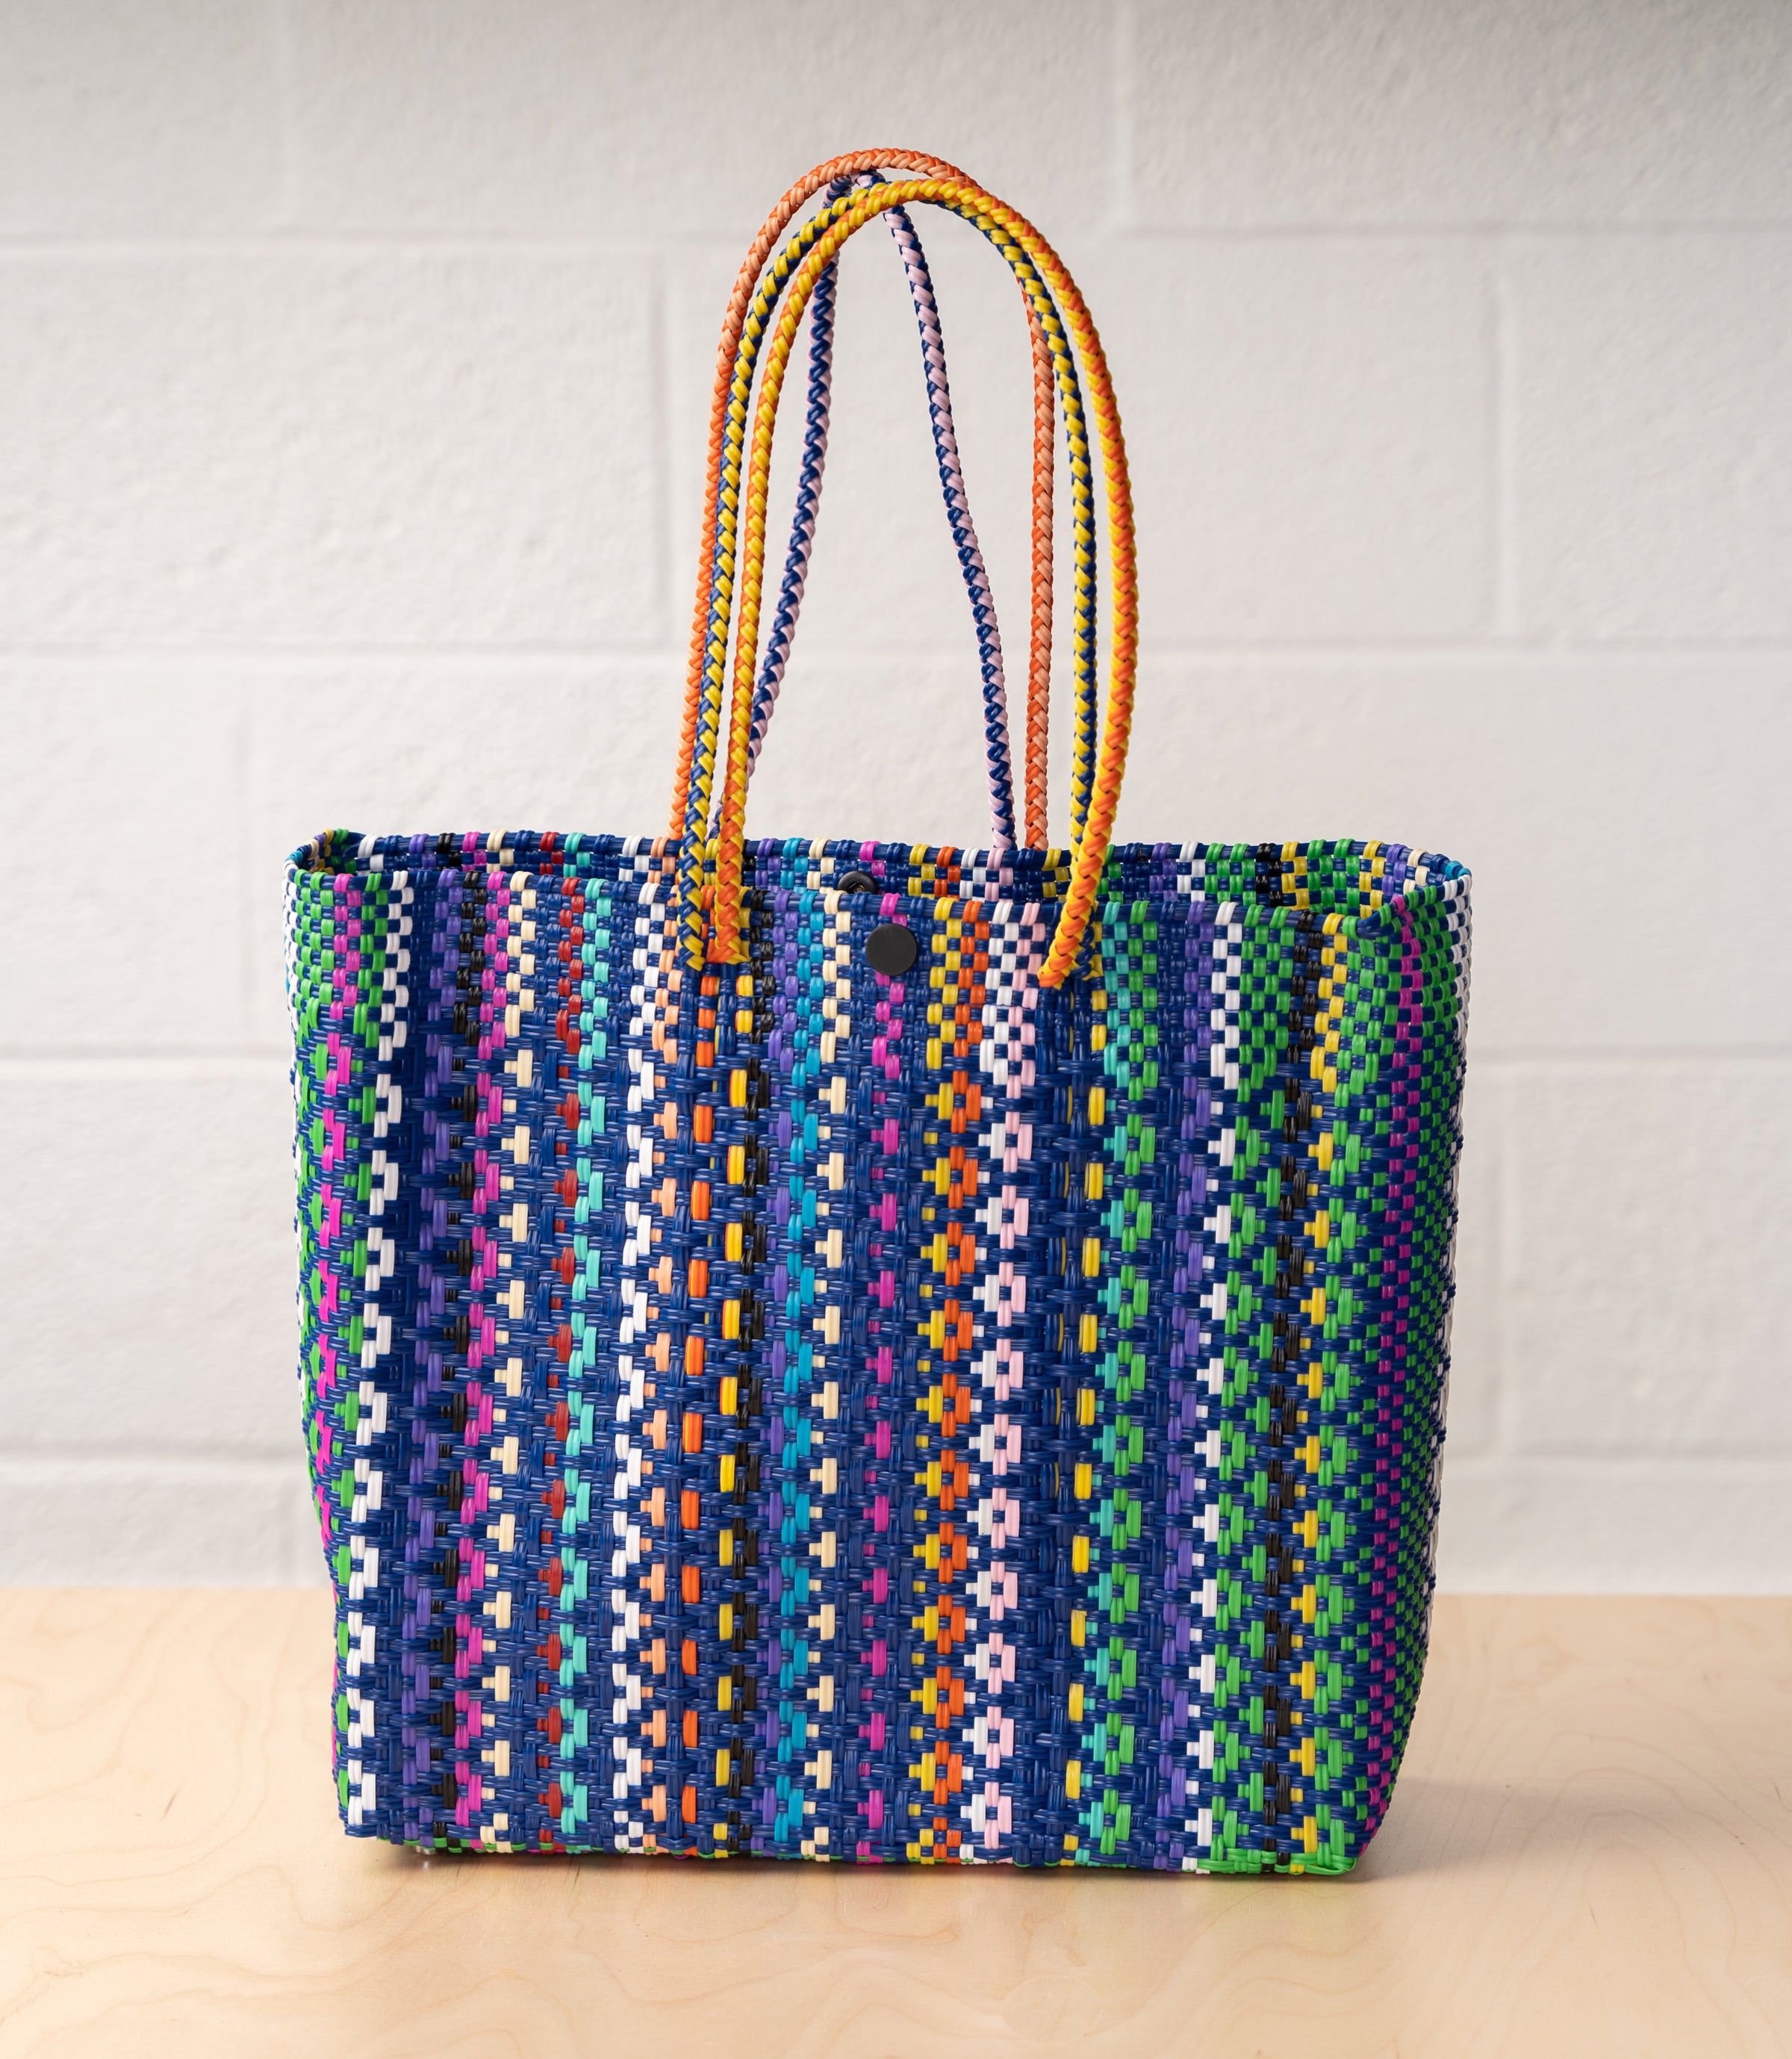 Handmade Plastic Tote Bags from Mexico. Shop Vosilo on Esty.com